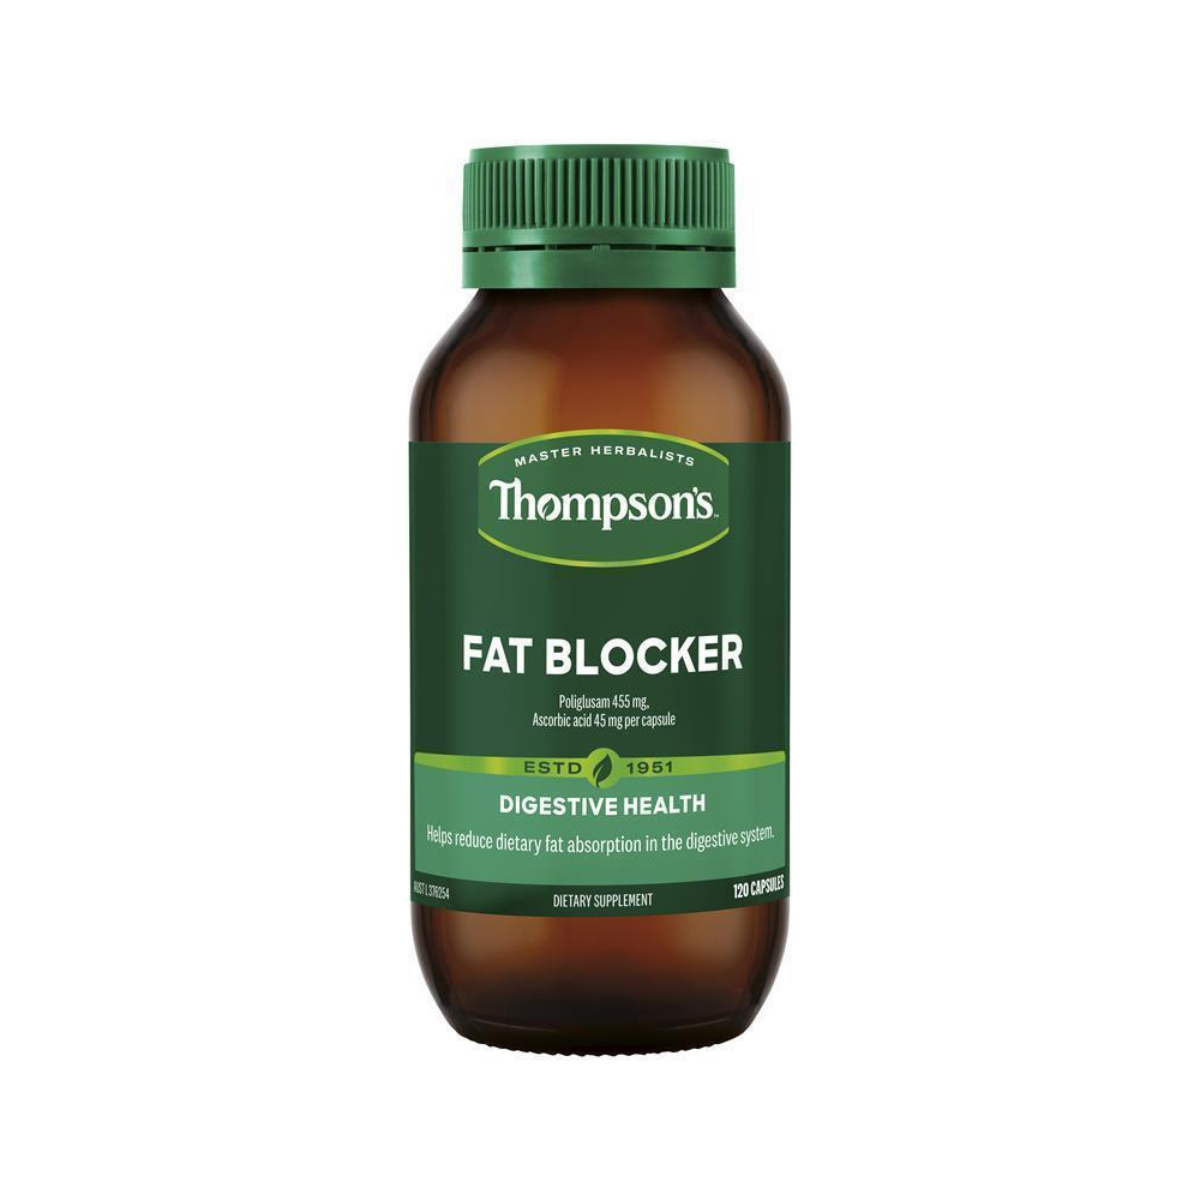 Fat blocker for improving digestion